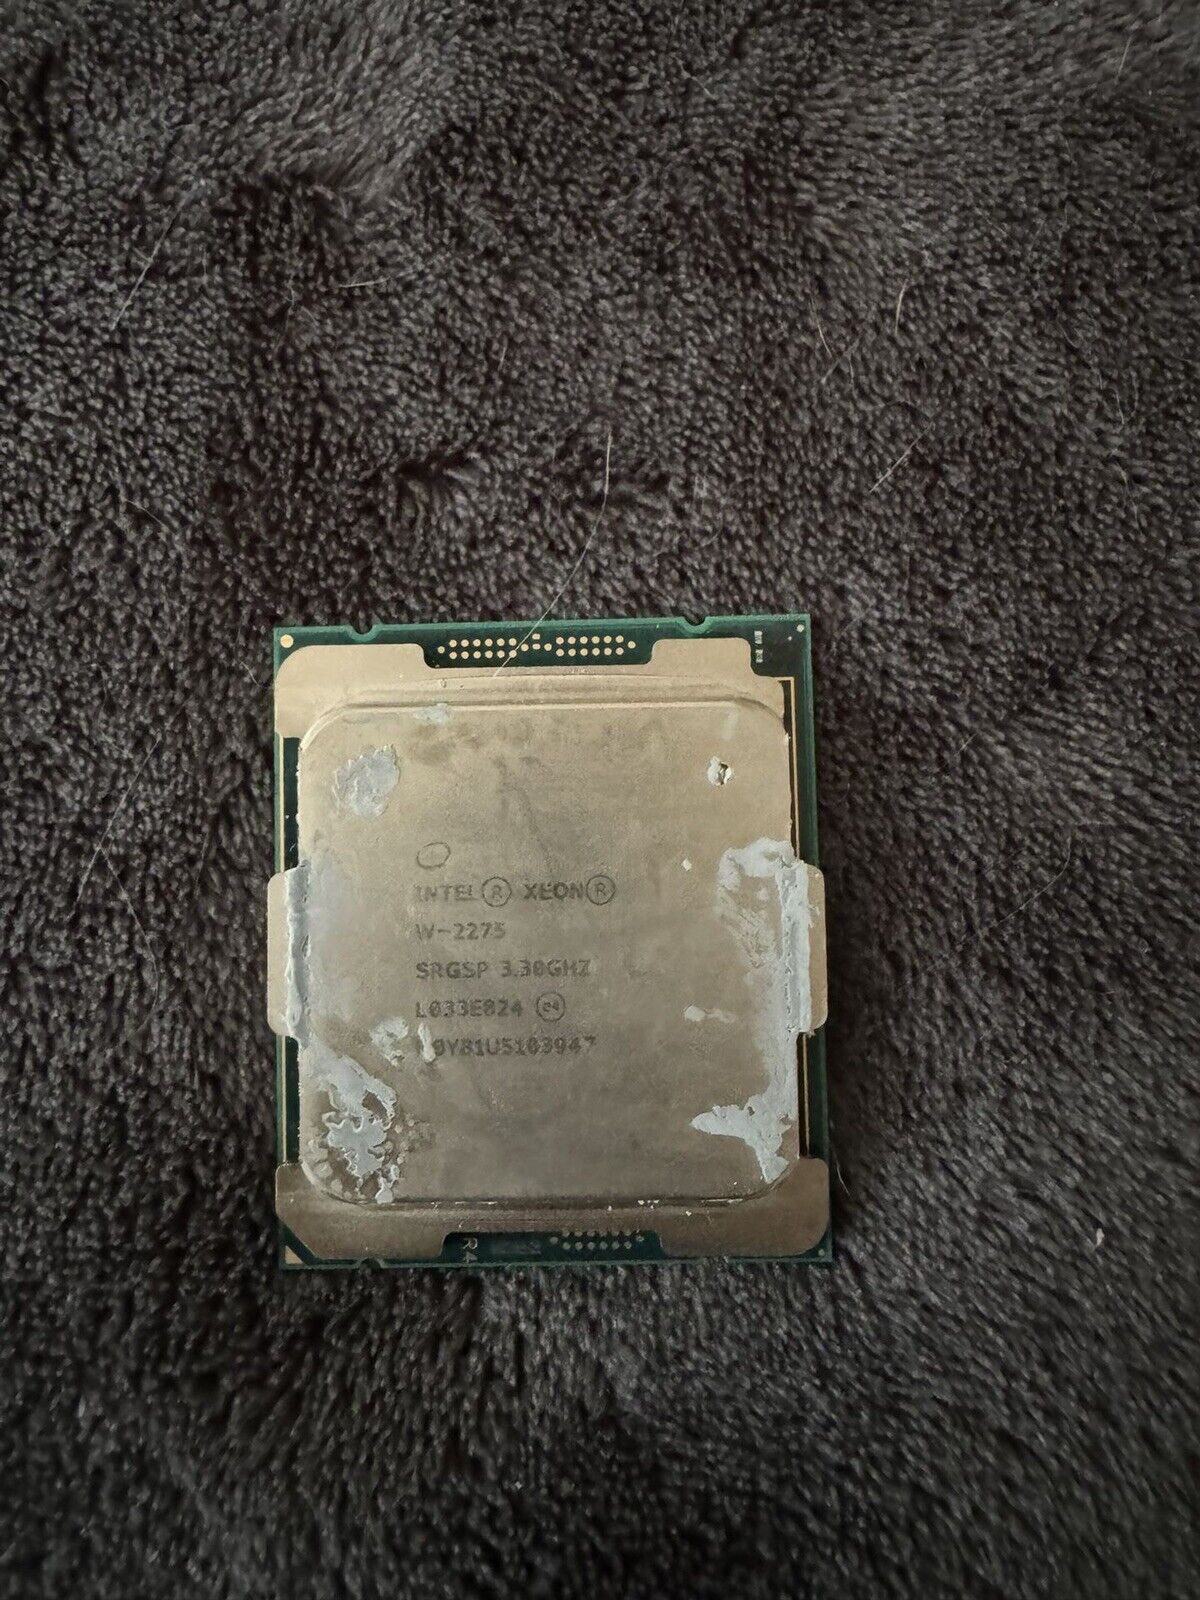 Intel Xeon W-2275 Processor